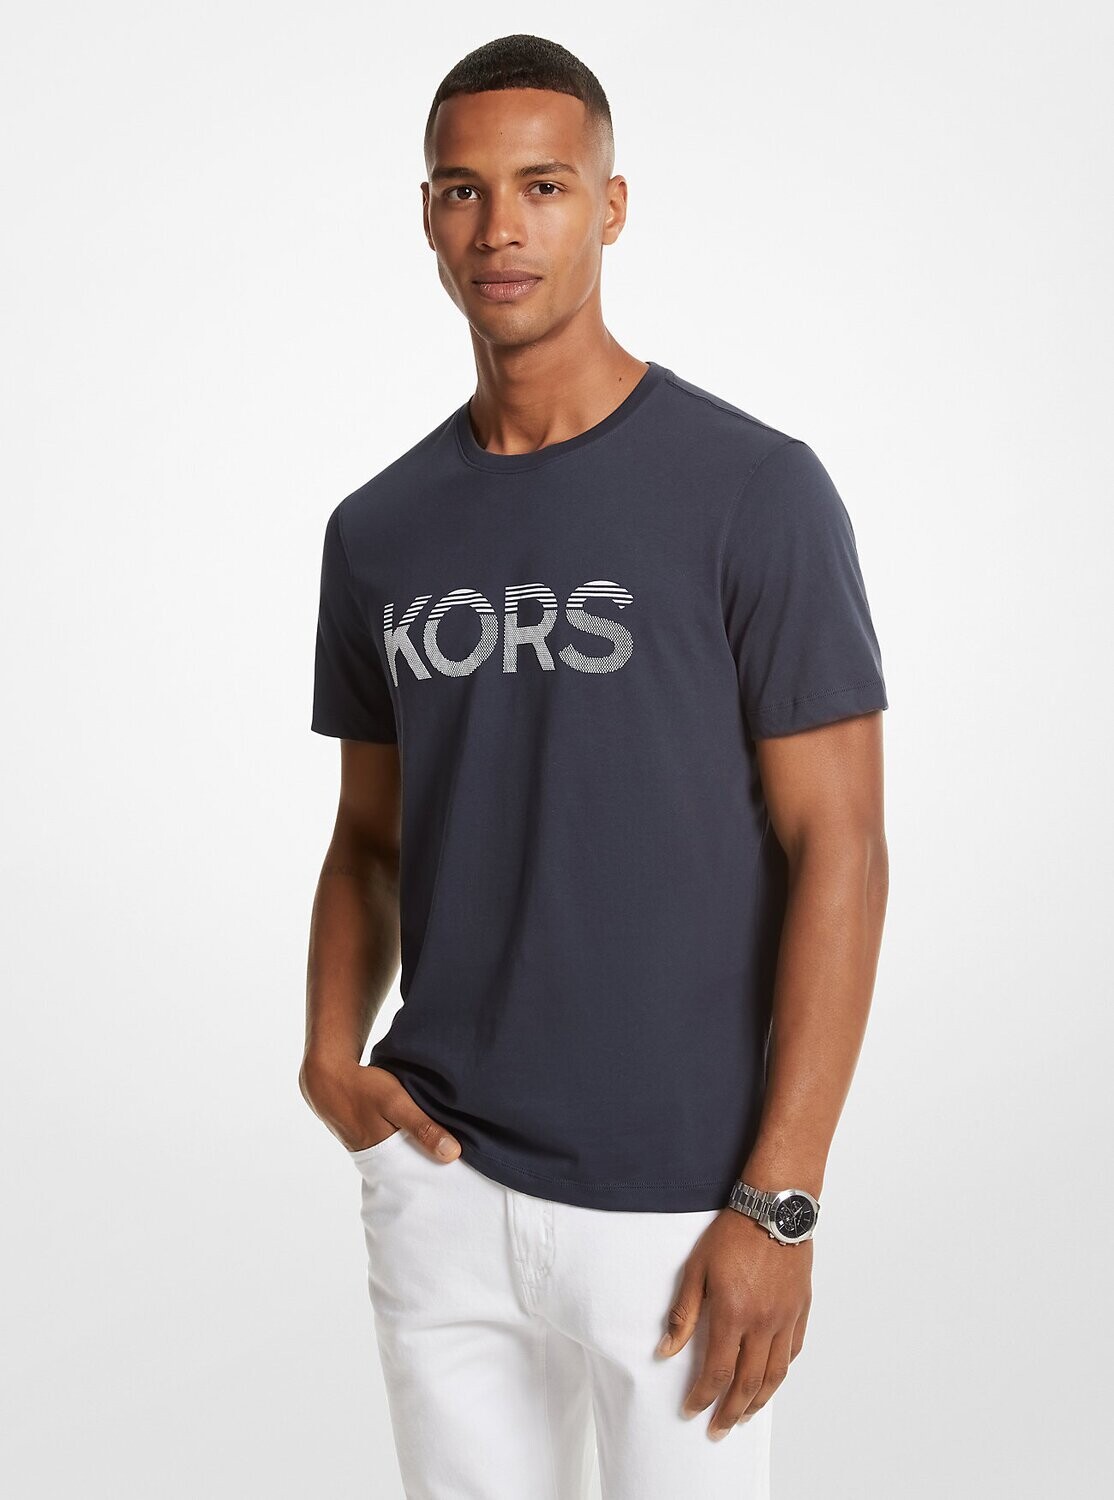 Michael Kors CF351MIFV4 Men's SS Tipped Kors Logo T-Shirt/, Color: MIDNIGHT, Size: S